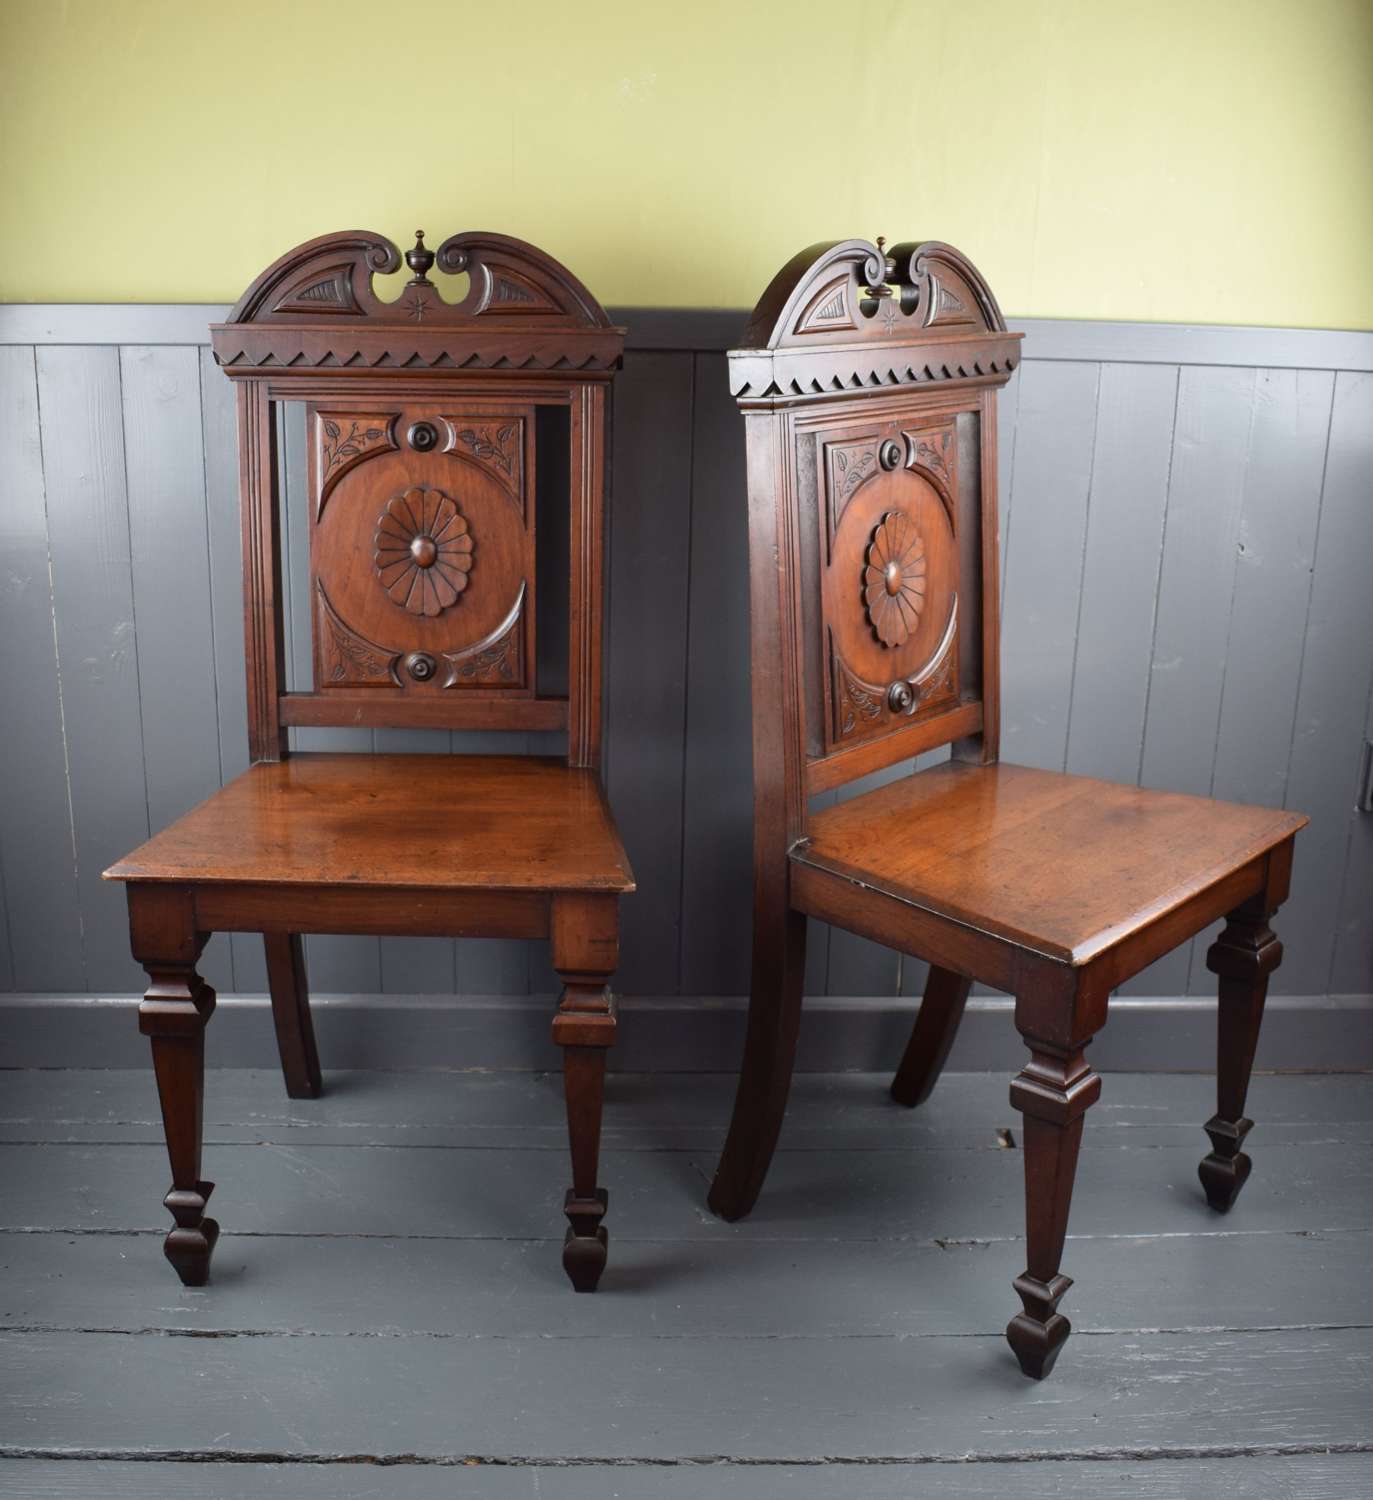 Pair of Victorian Mahogany Hall Chairs